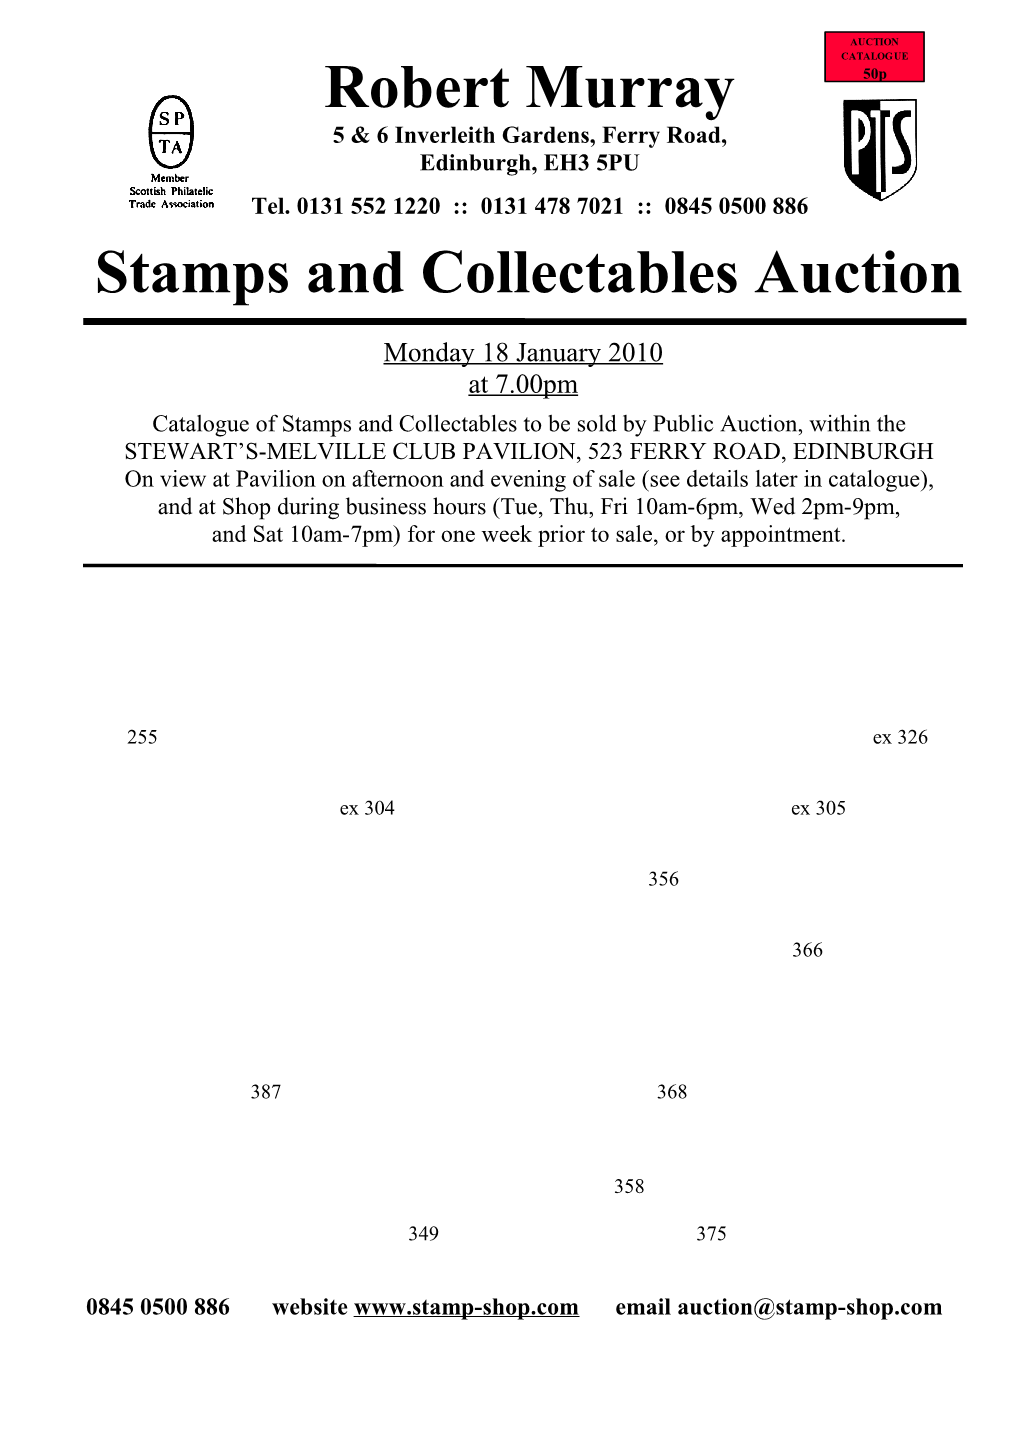 Robert Murray Stamp Auction s3